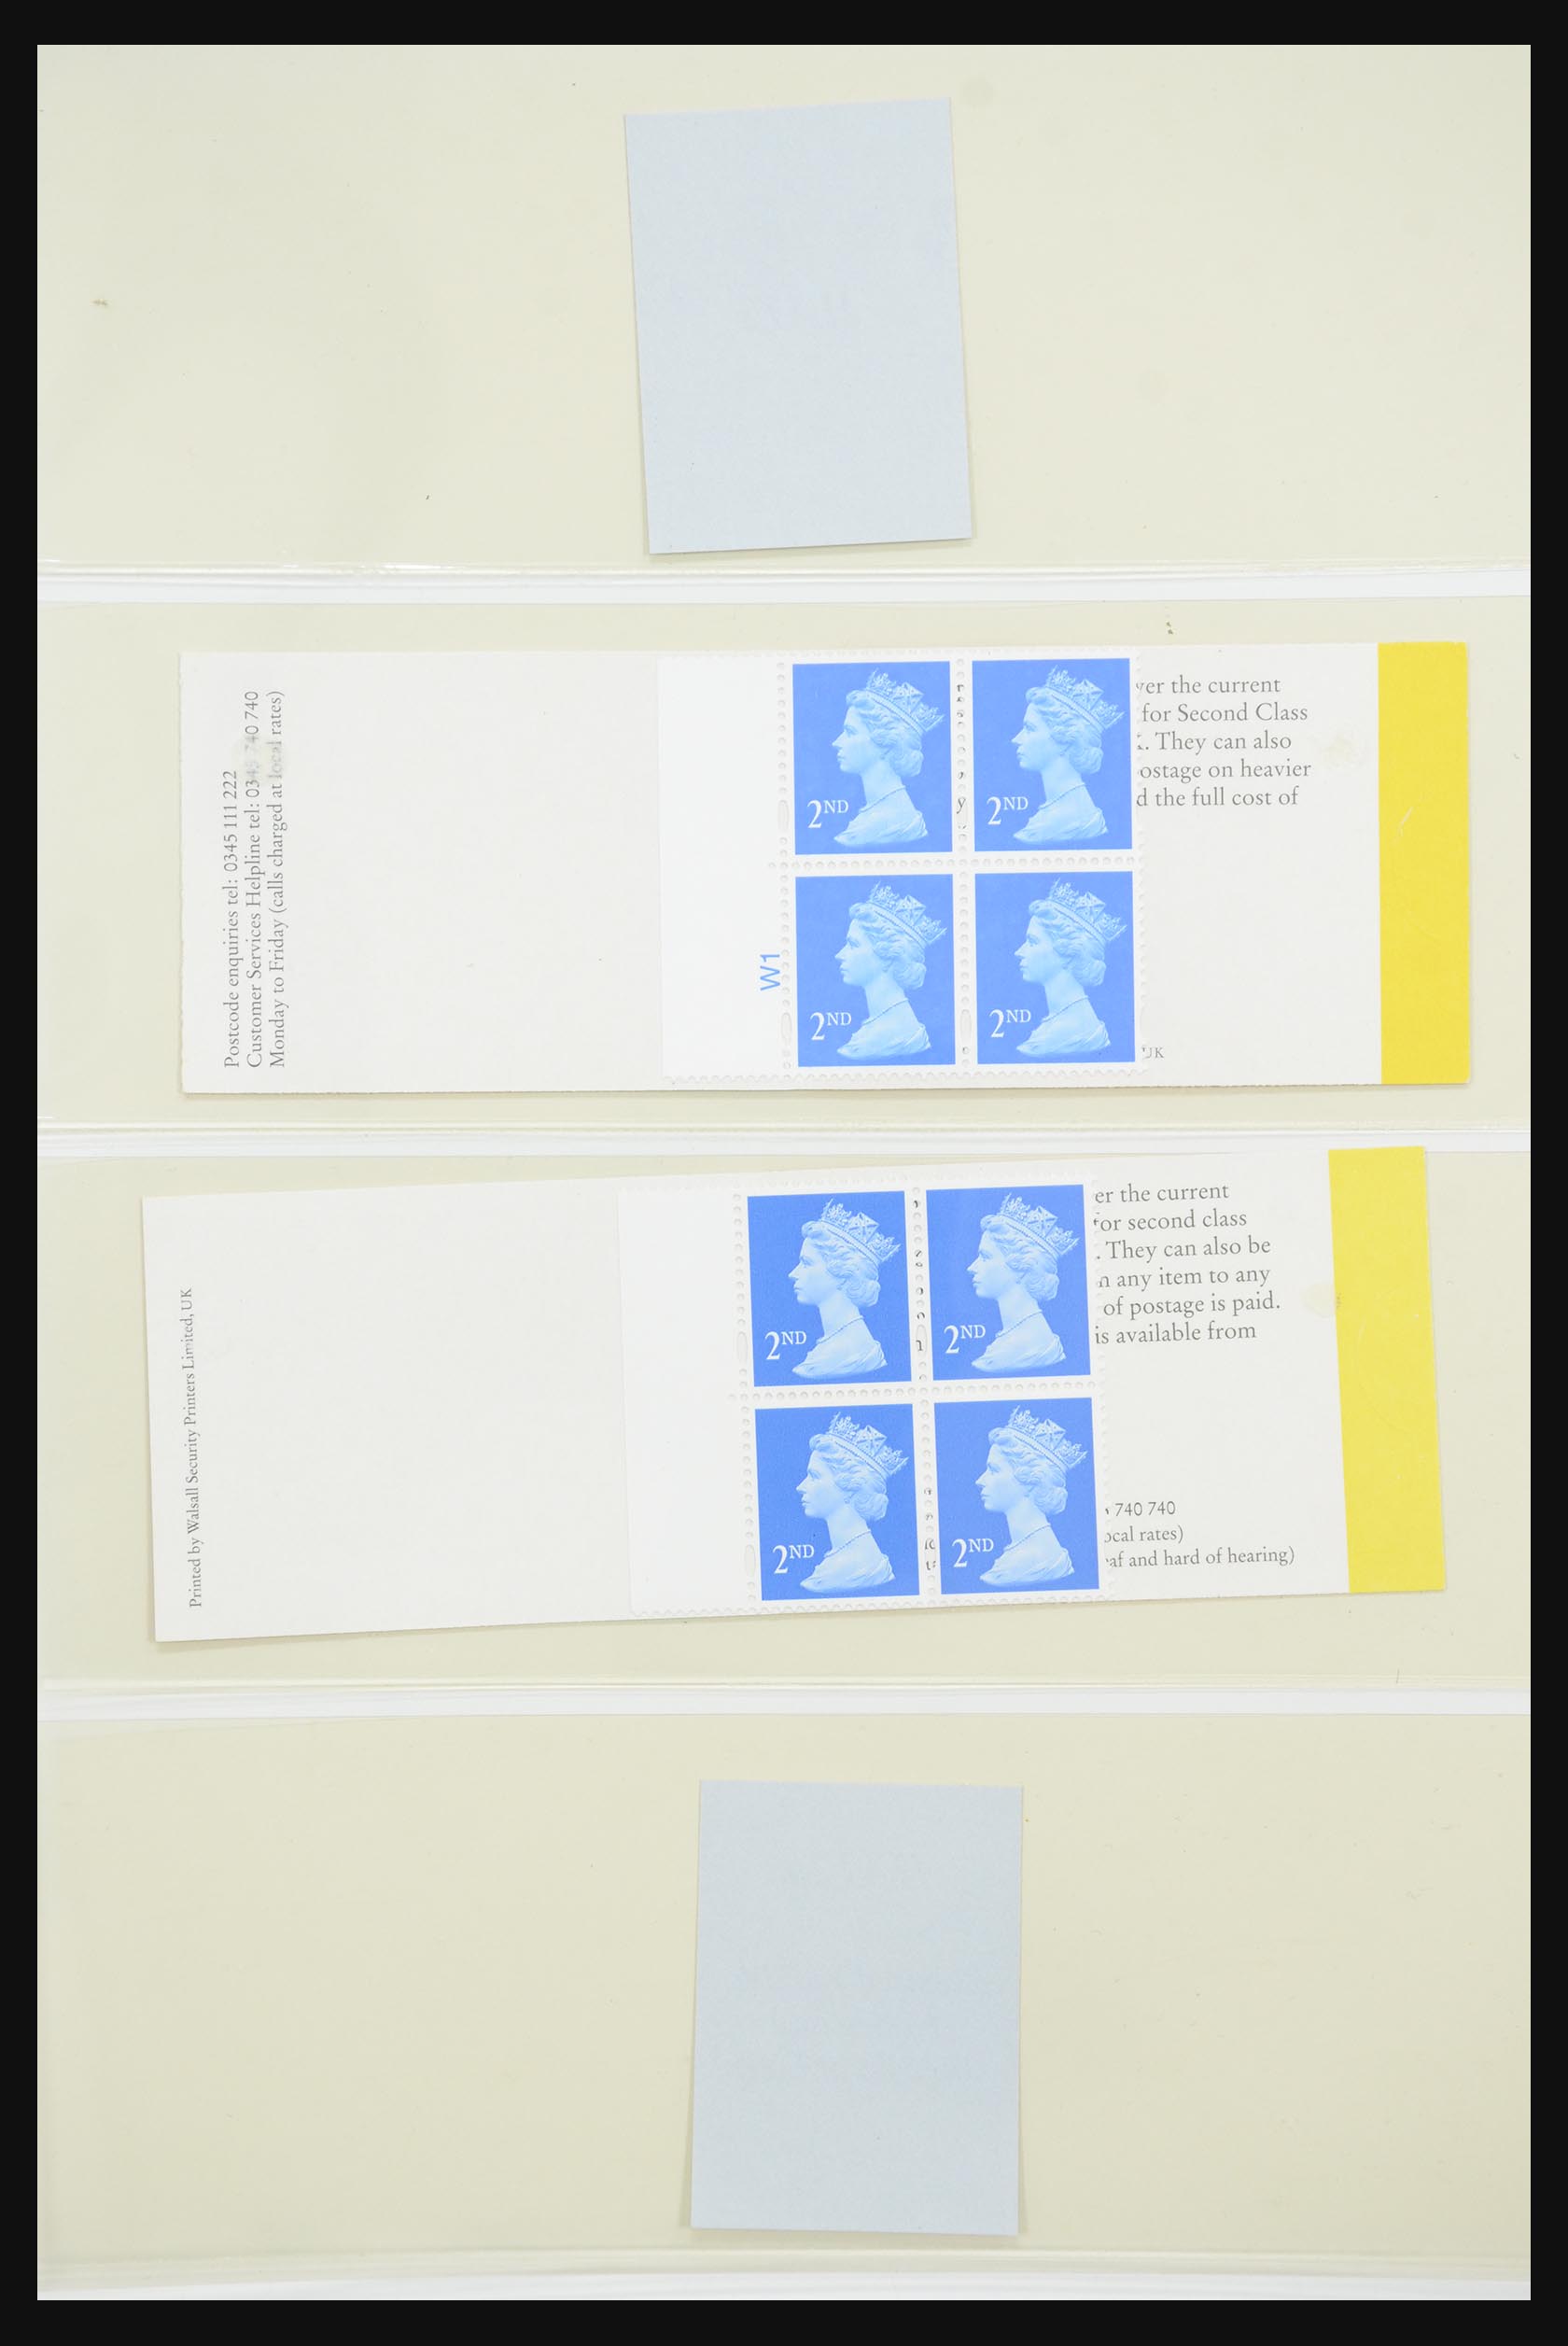 31960 020 - 31960 Great Britain stampbooklets 1989-2000.